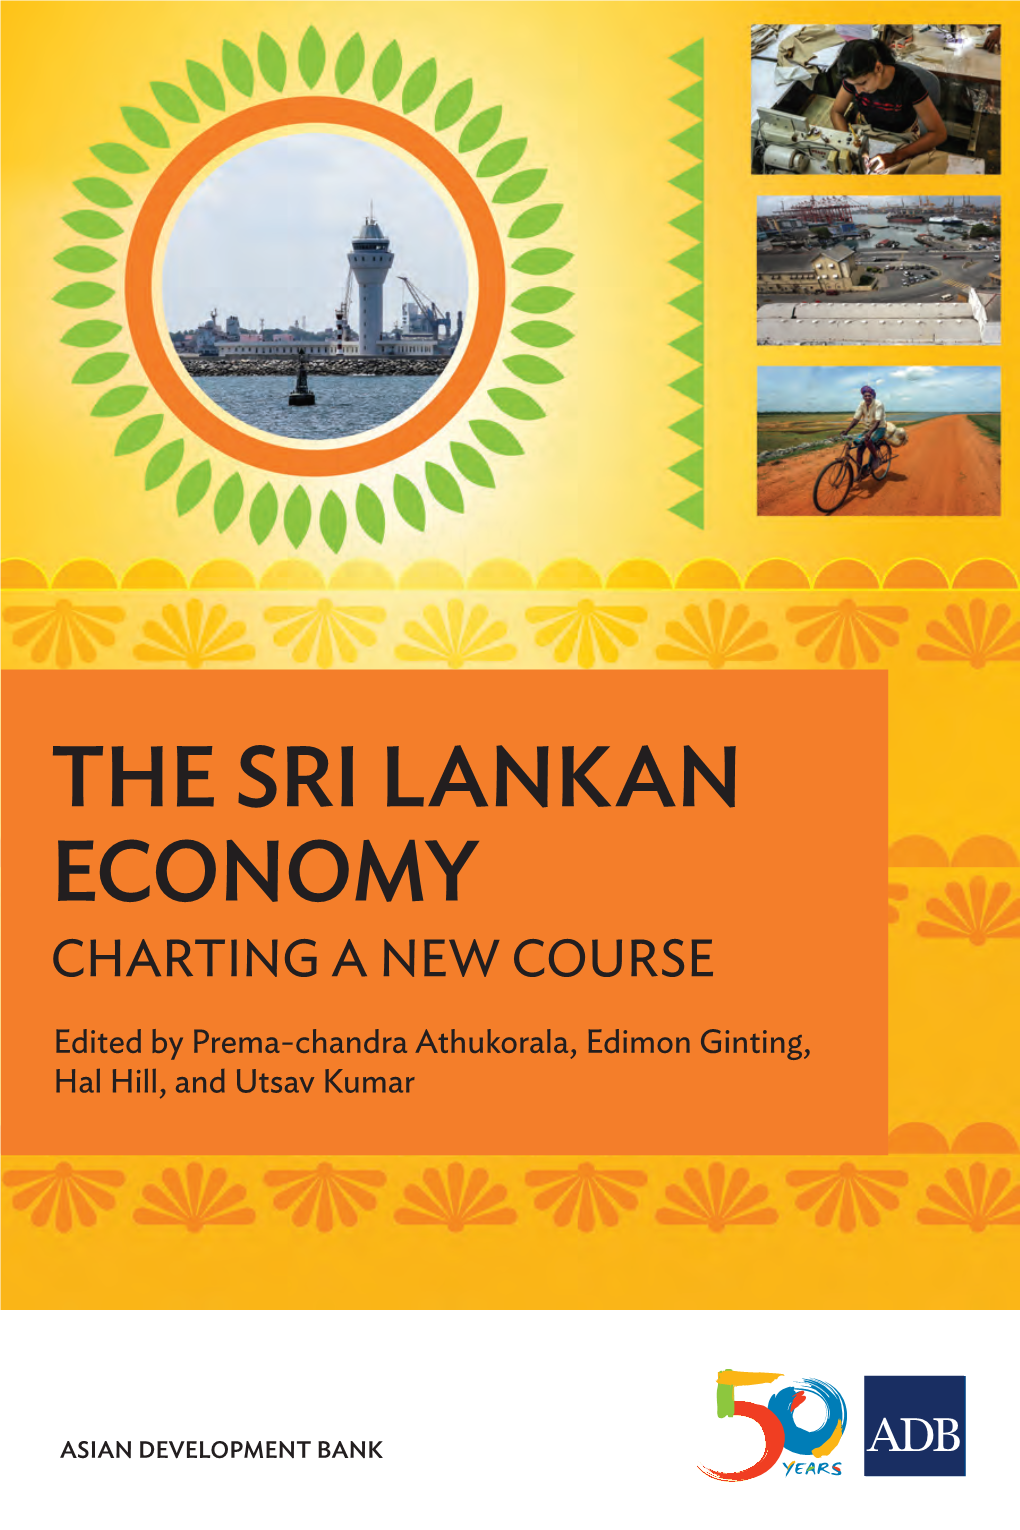 The Sri Lankan Economy Charting a New Course